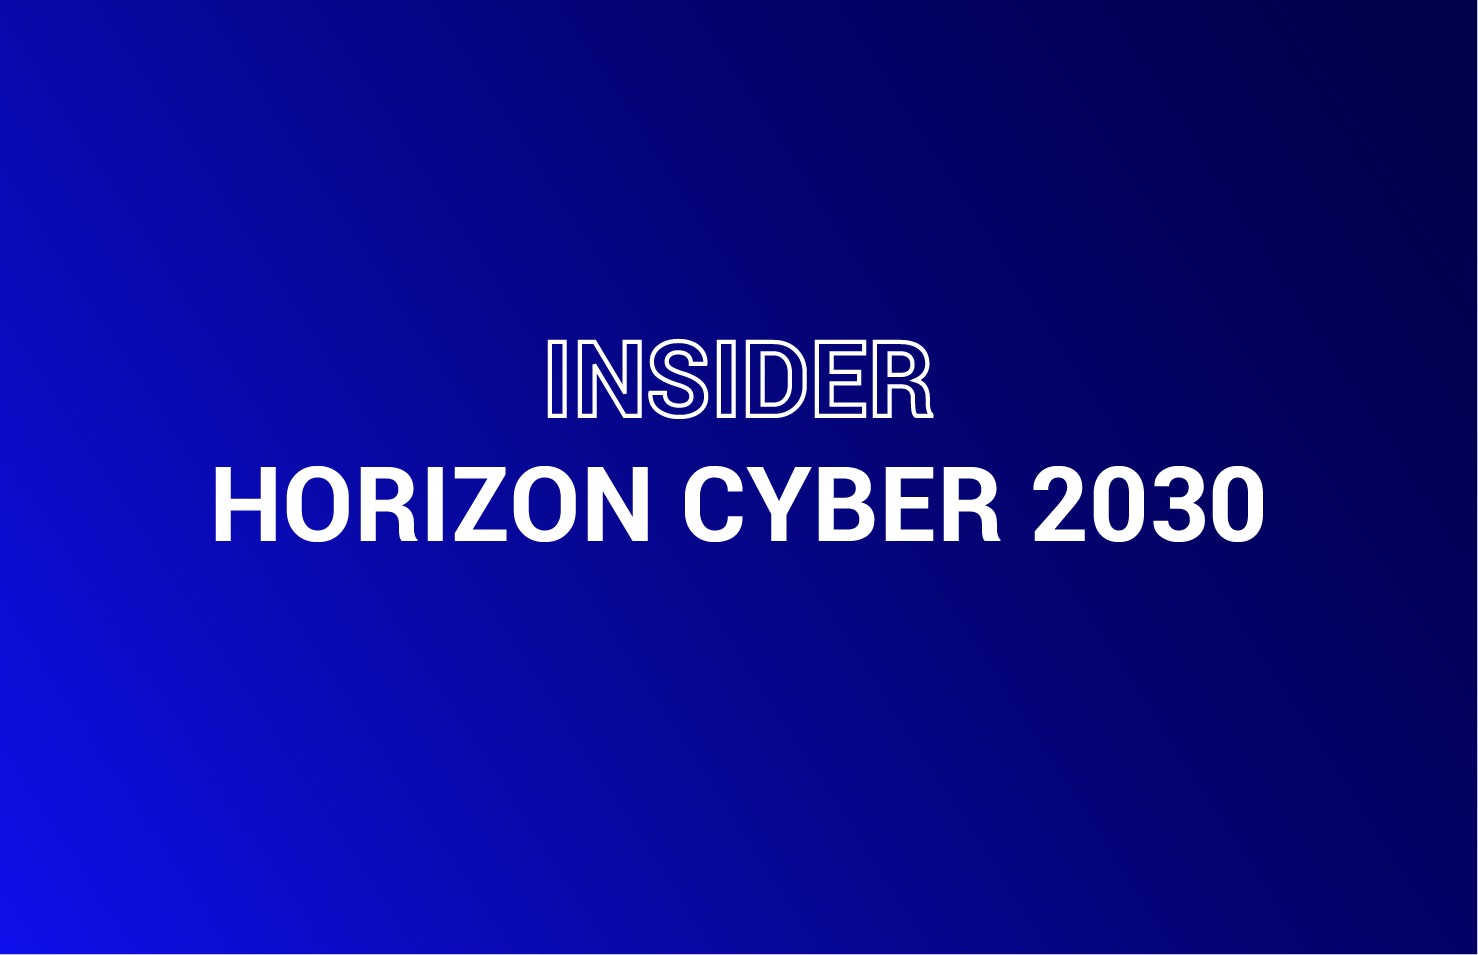 Insider / Horizon Cyber 2030